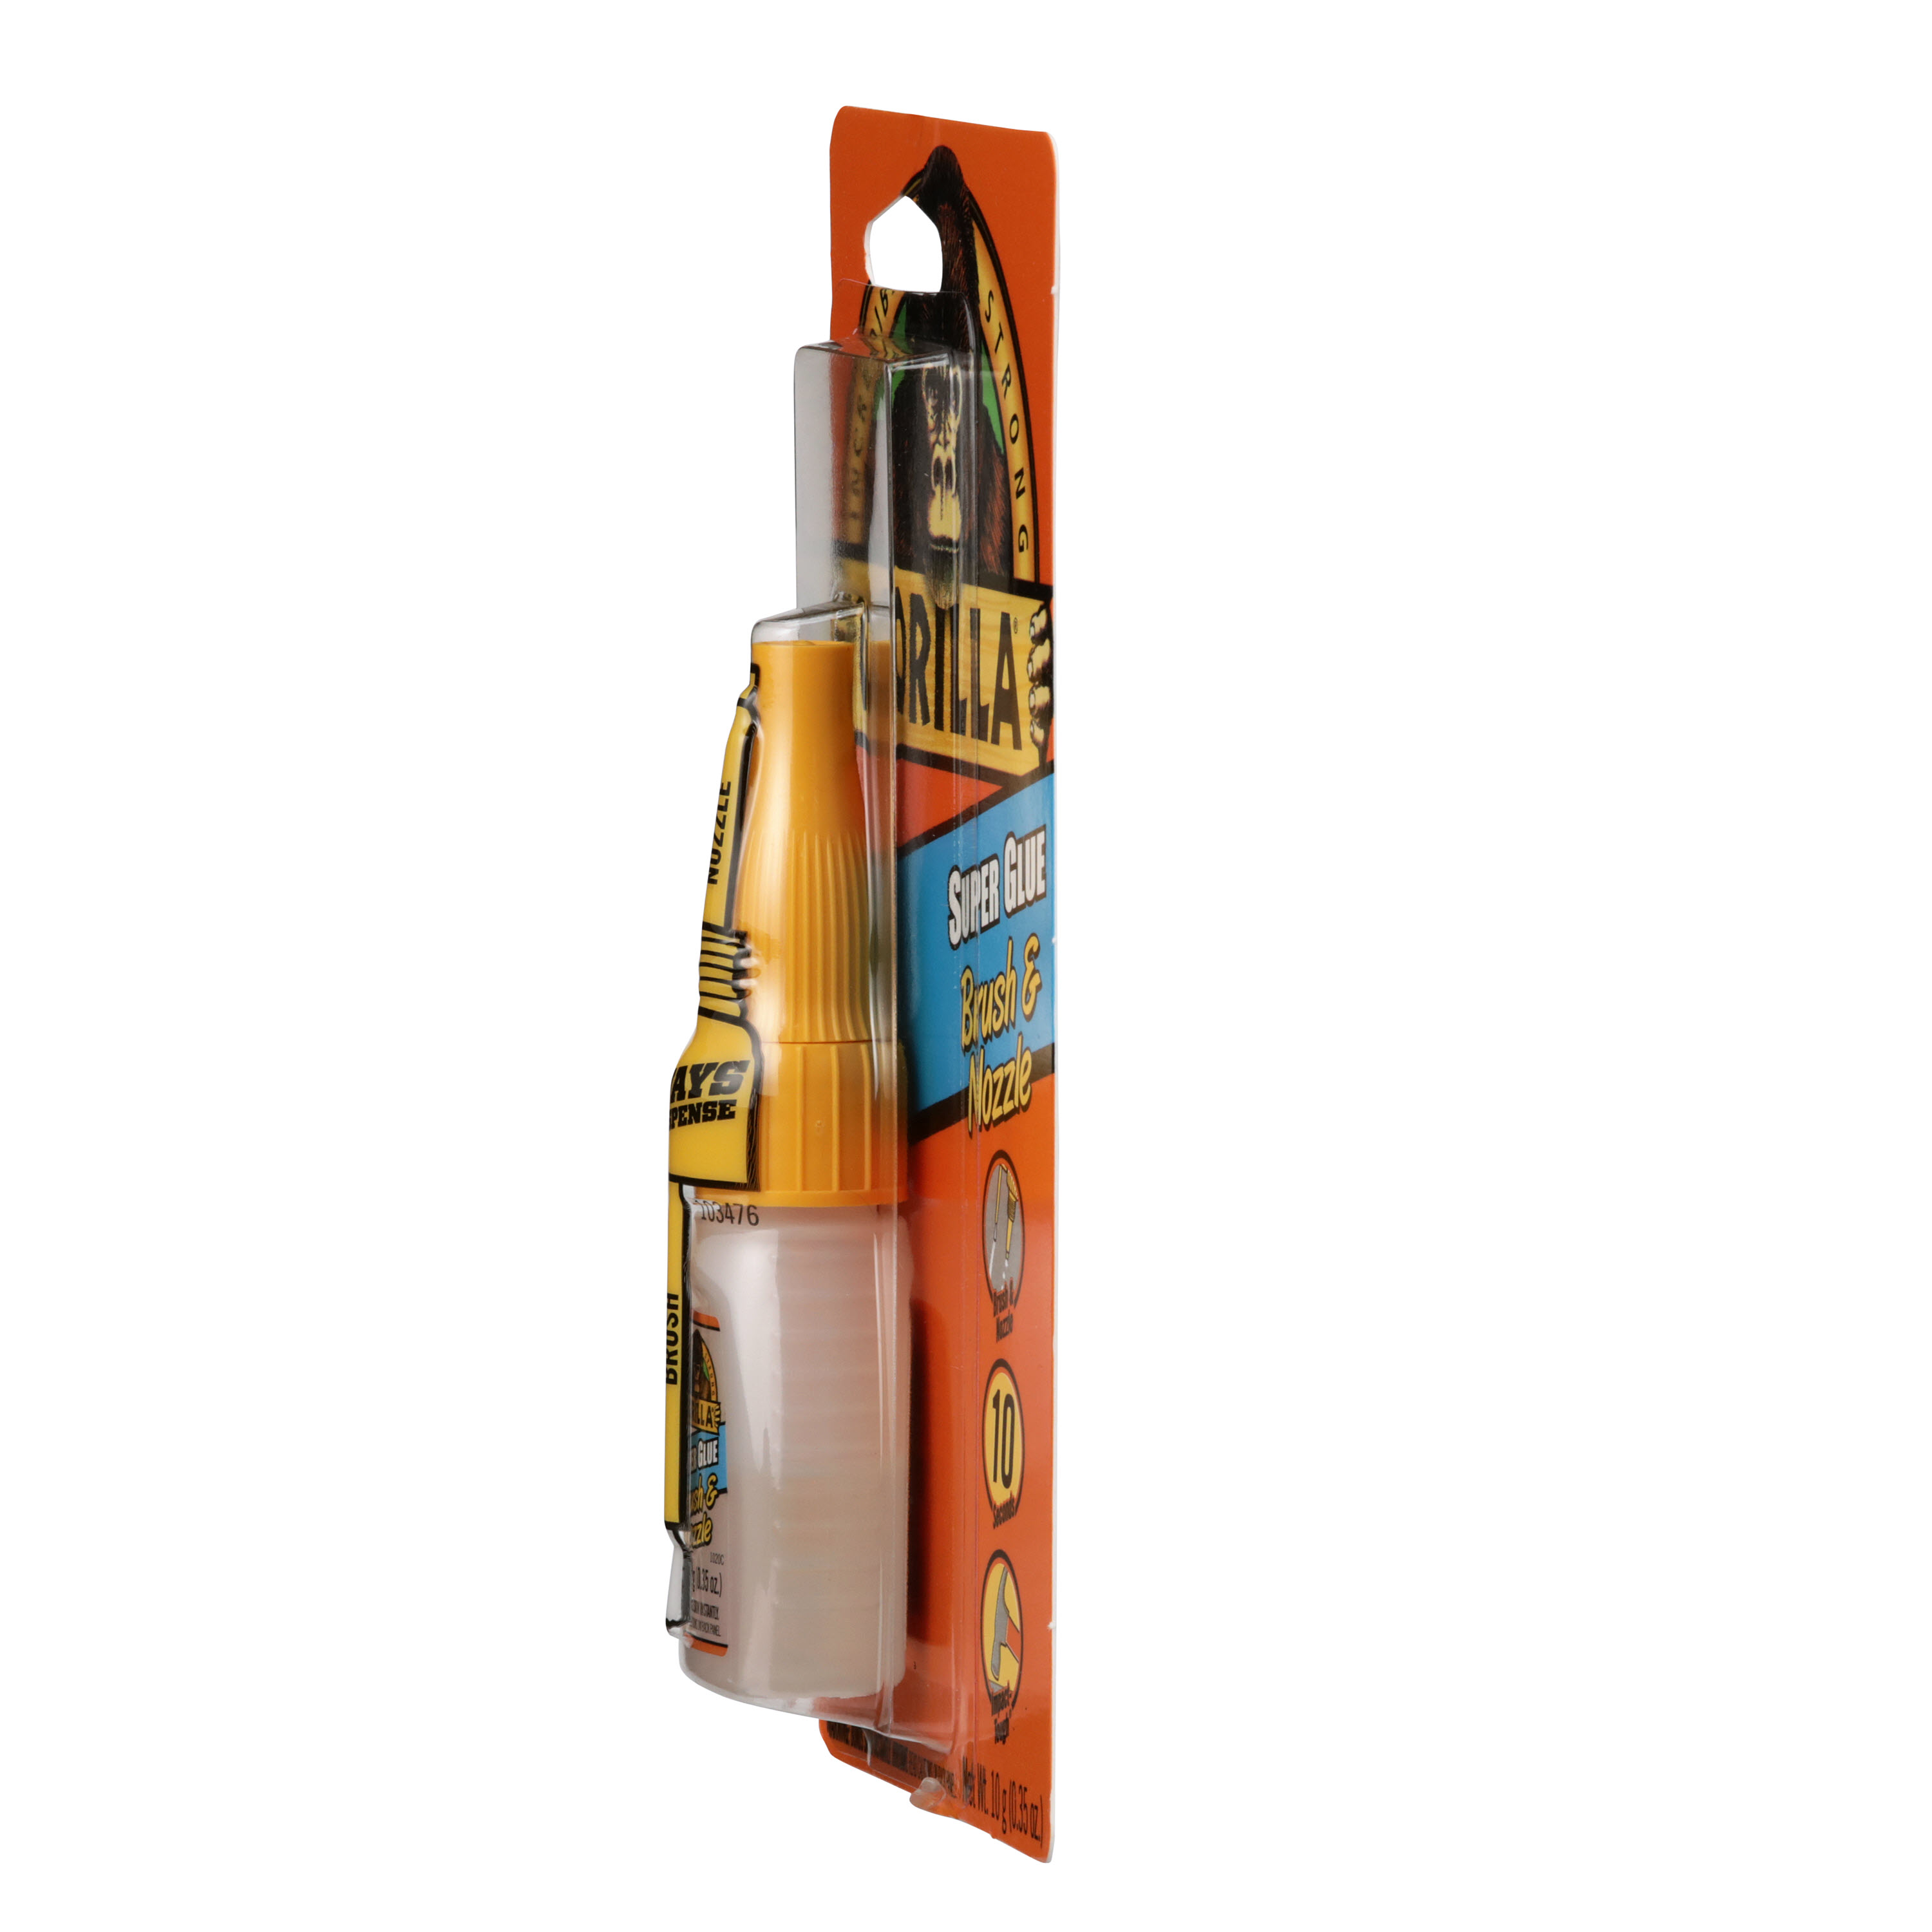 Gorilla 10g Super Glue Brush and Nozzle 102388 - The Home Depot